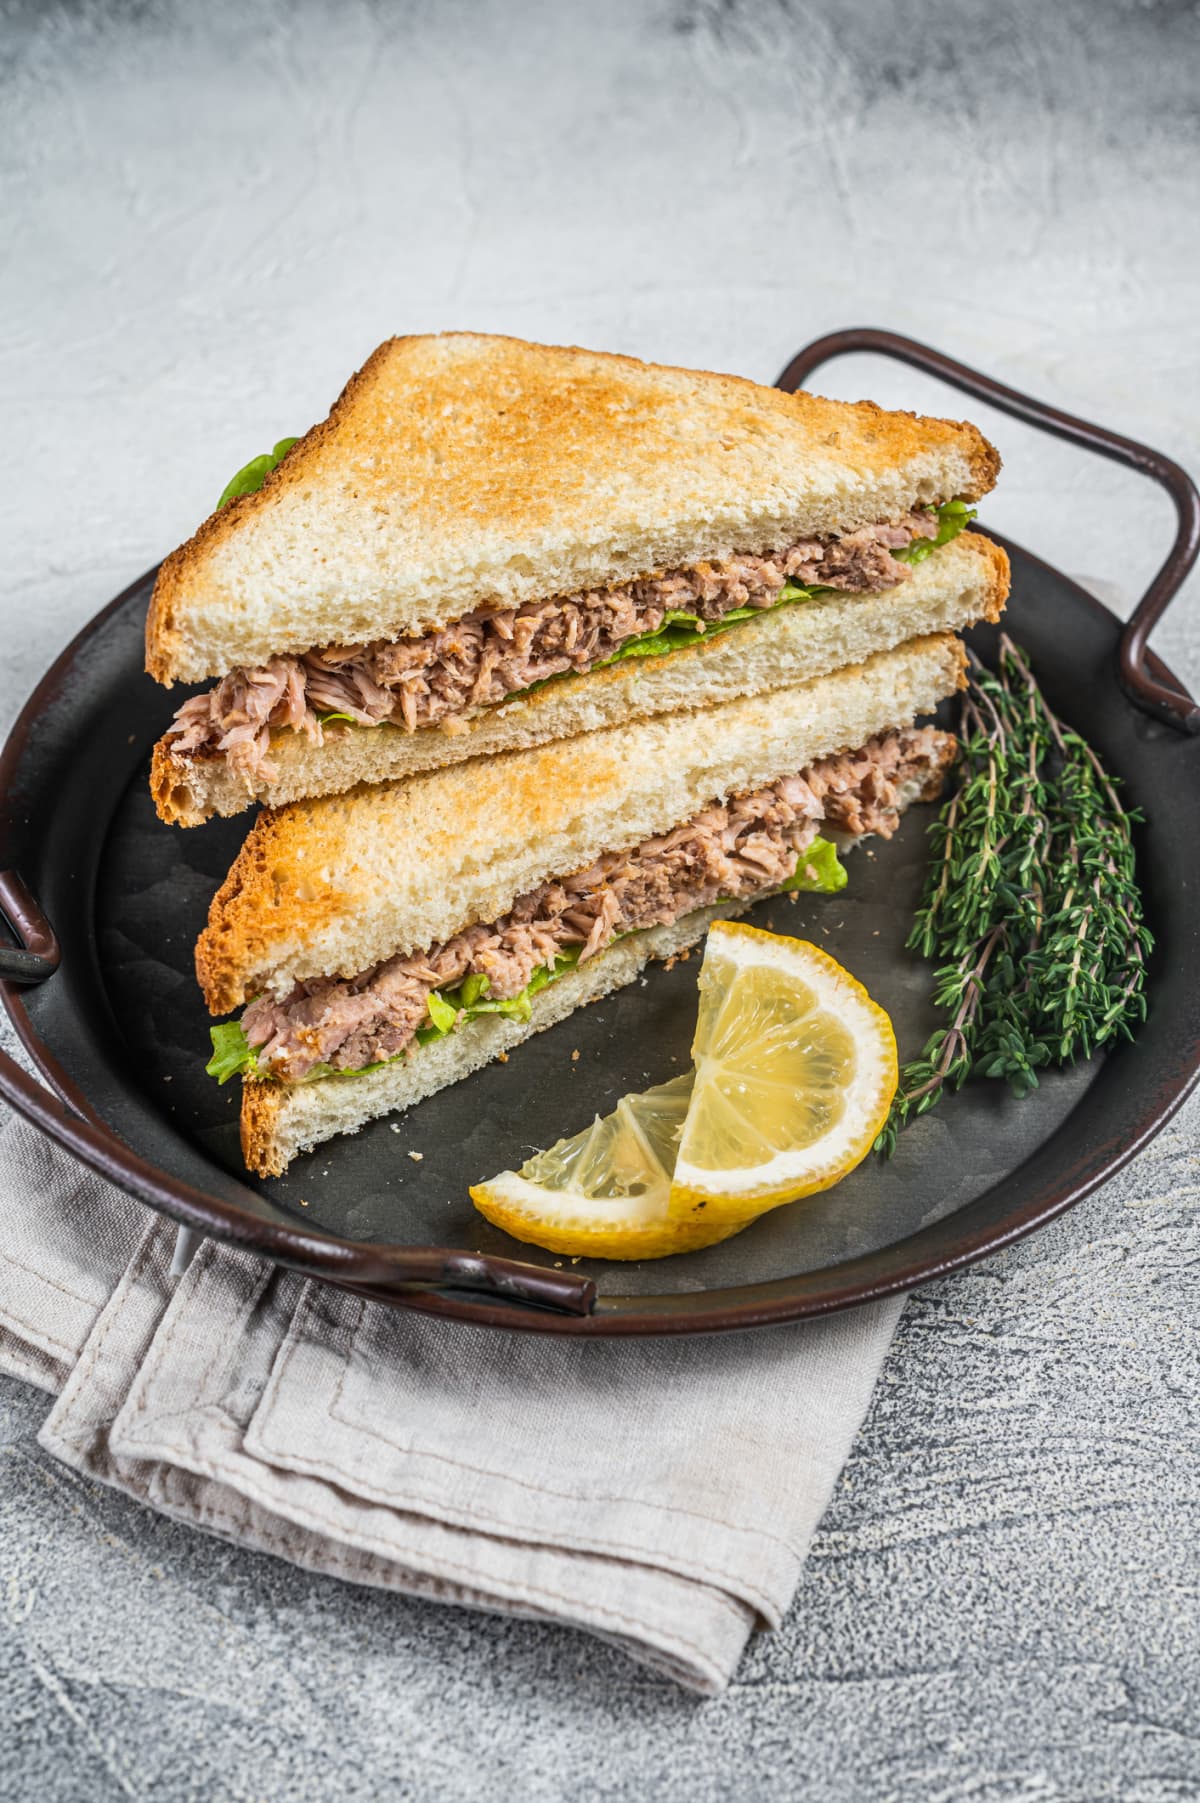 Tuna salad sandwich with lettuce on toasted whole grain bread cut in half on a cutting board